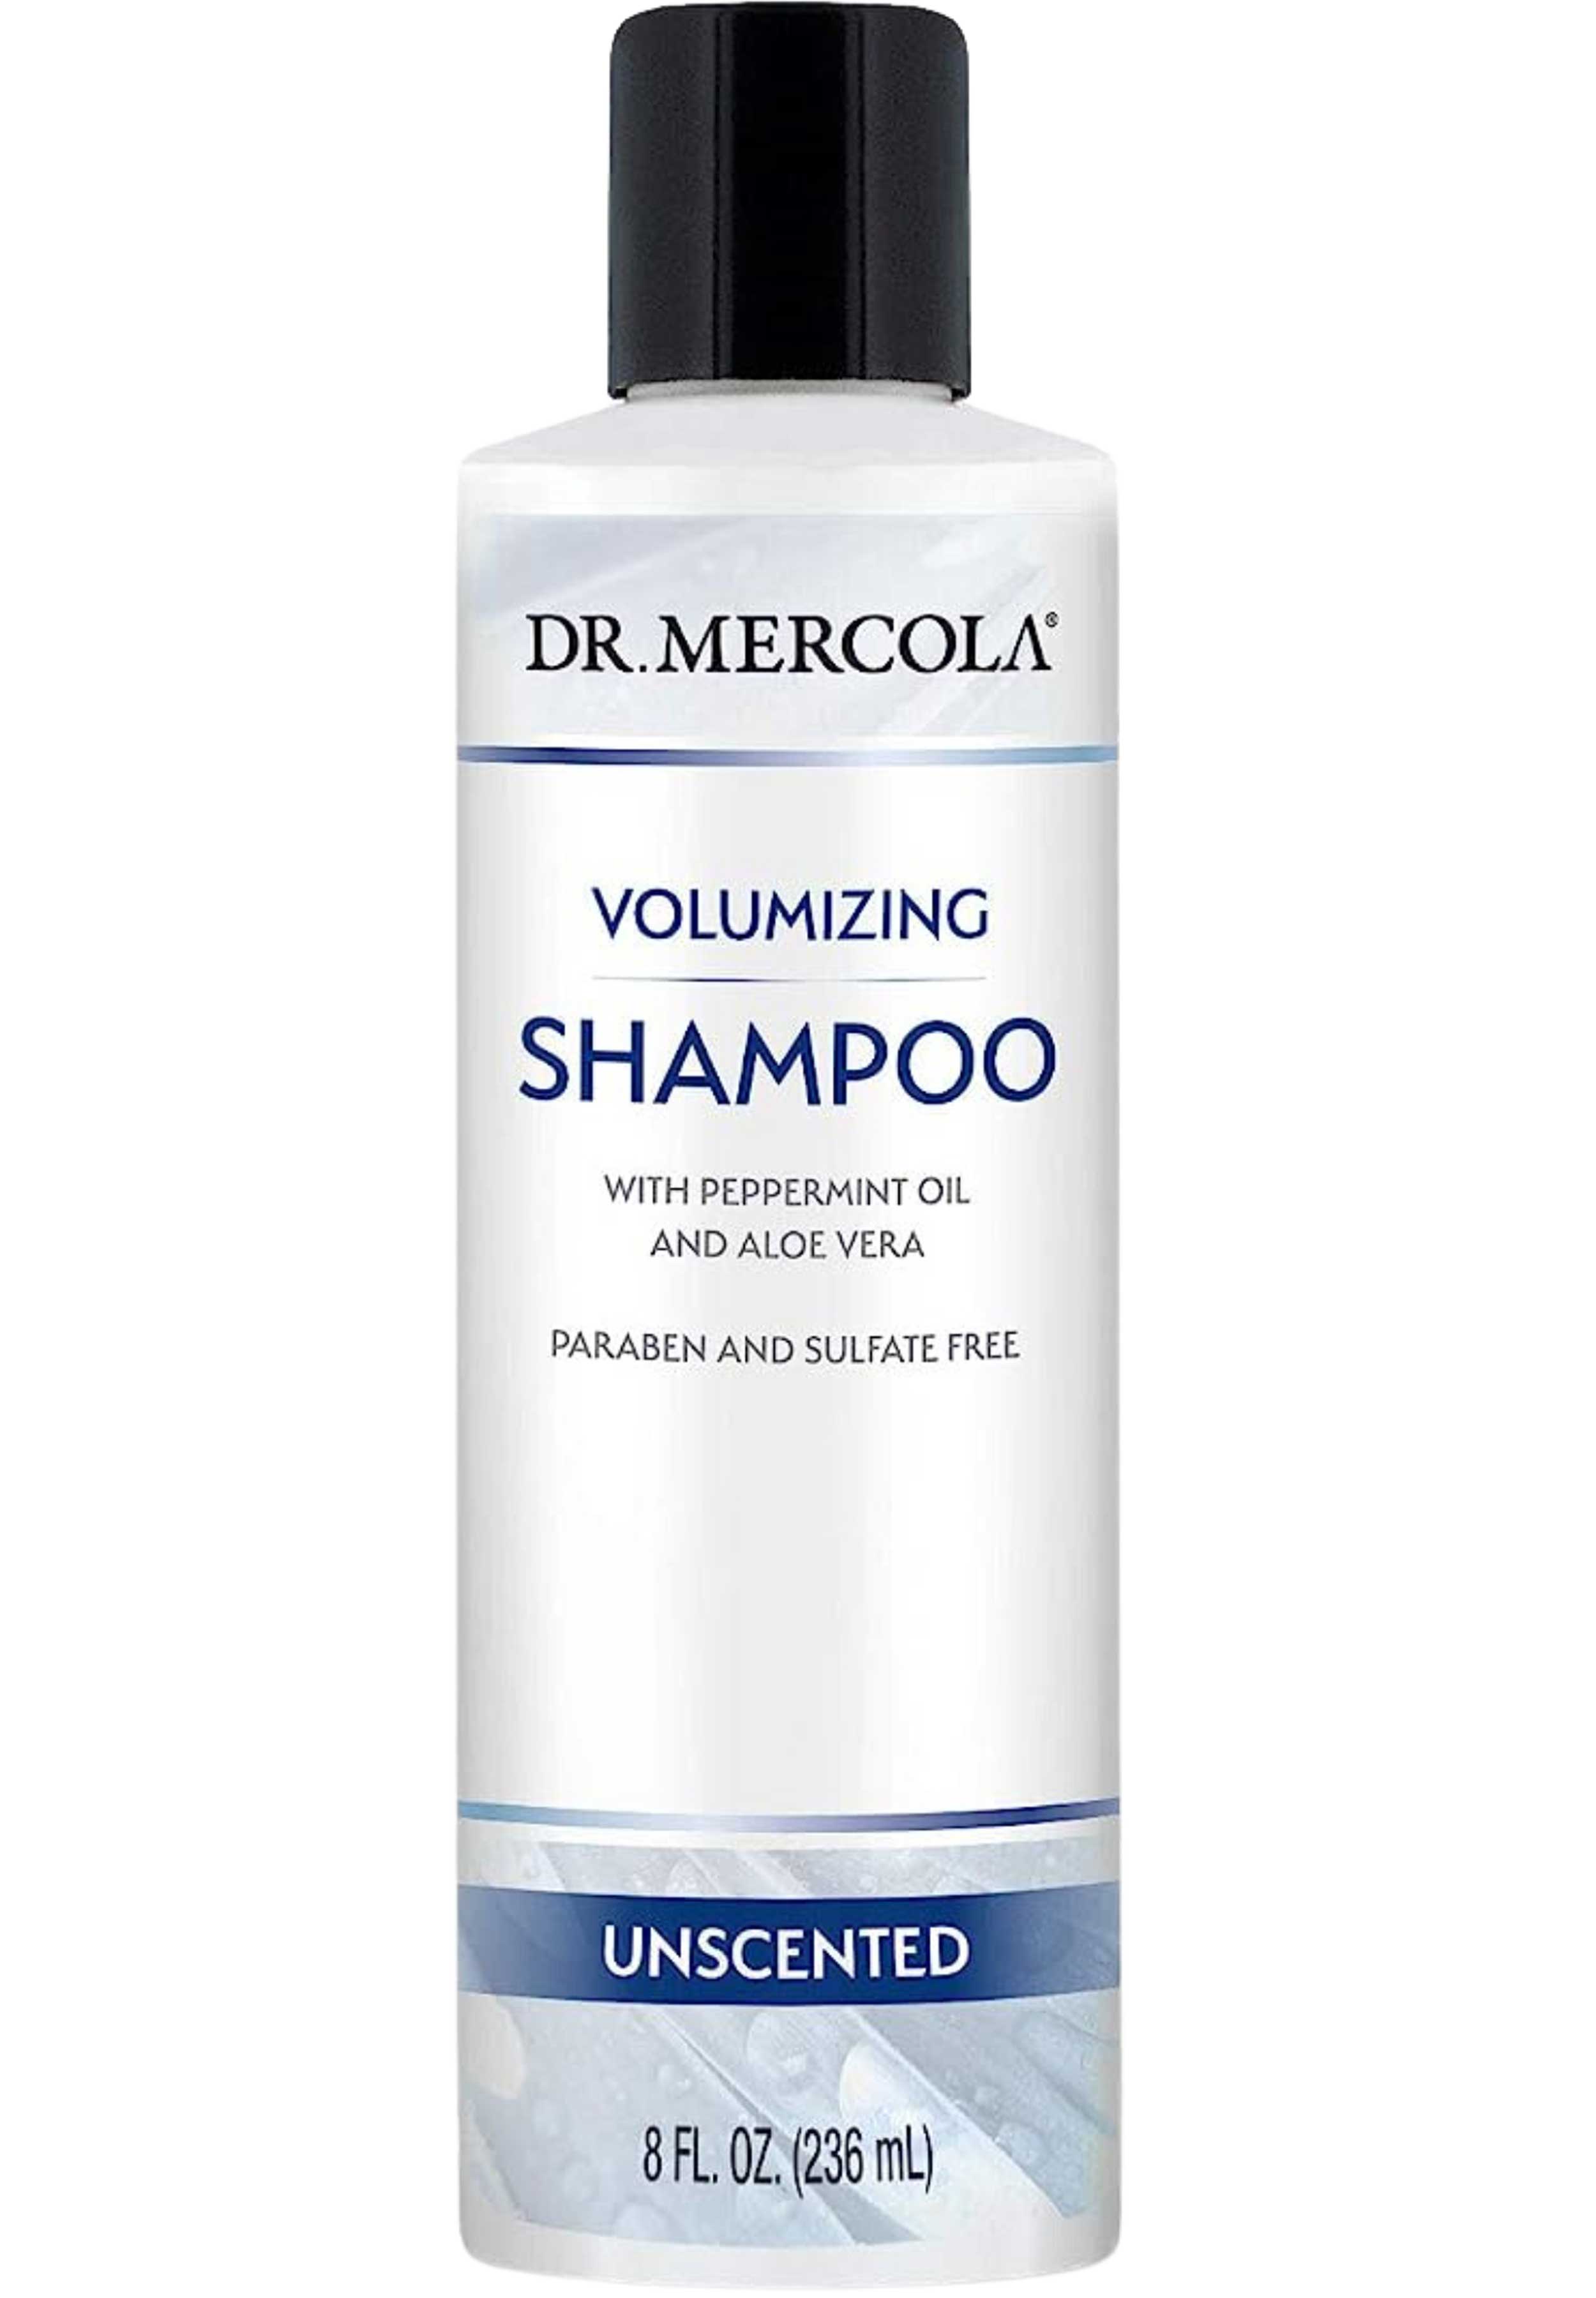 Dr. Mercola Volumizing Shampoo